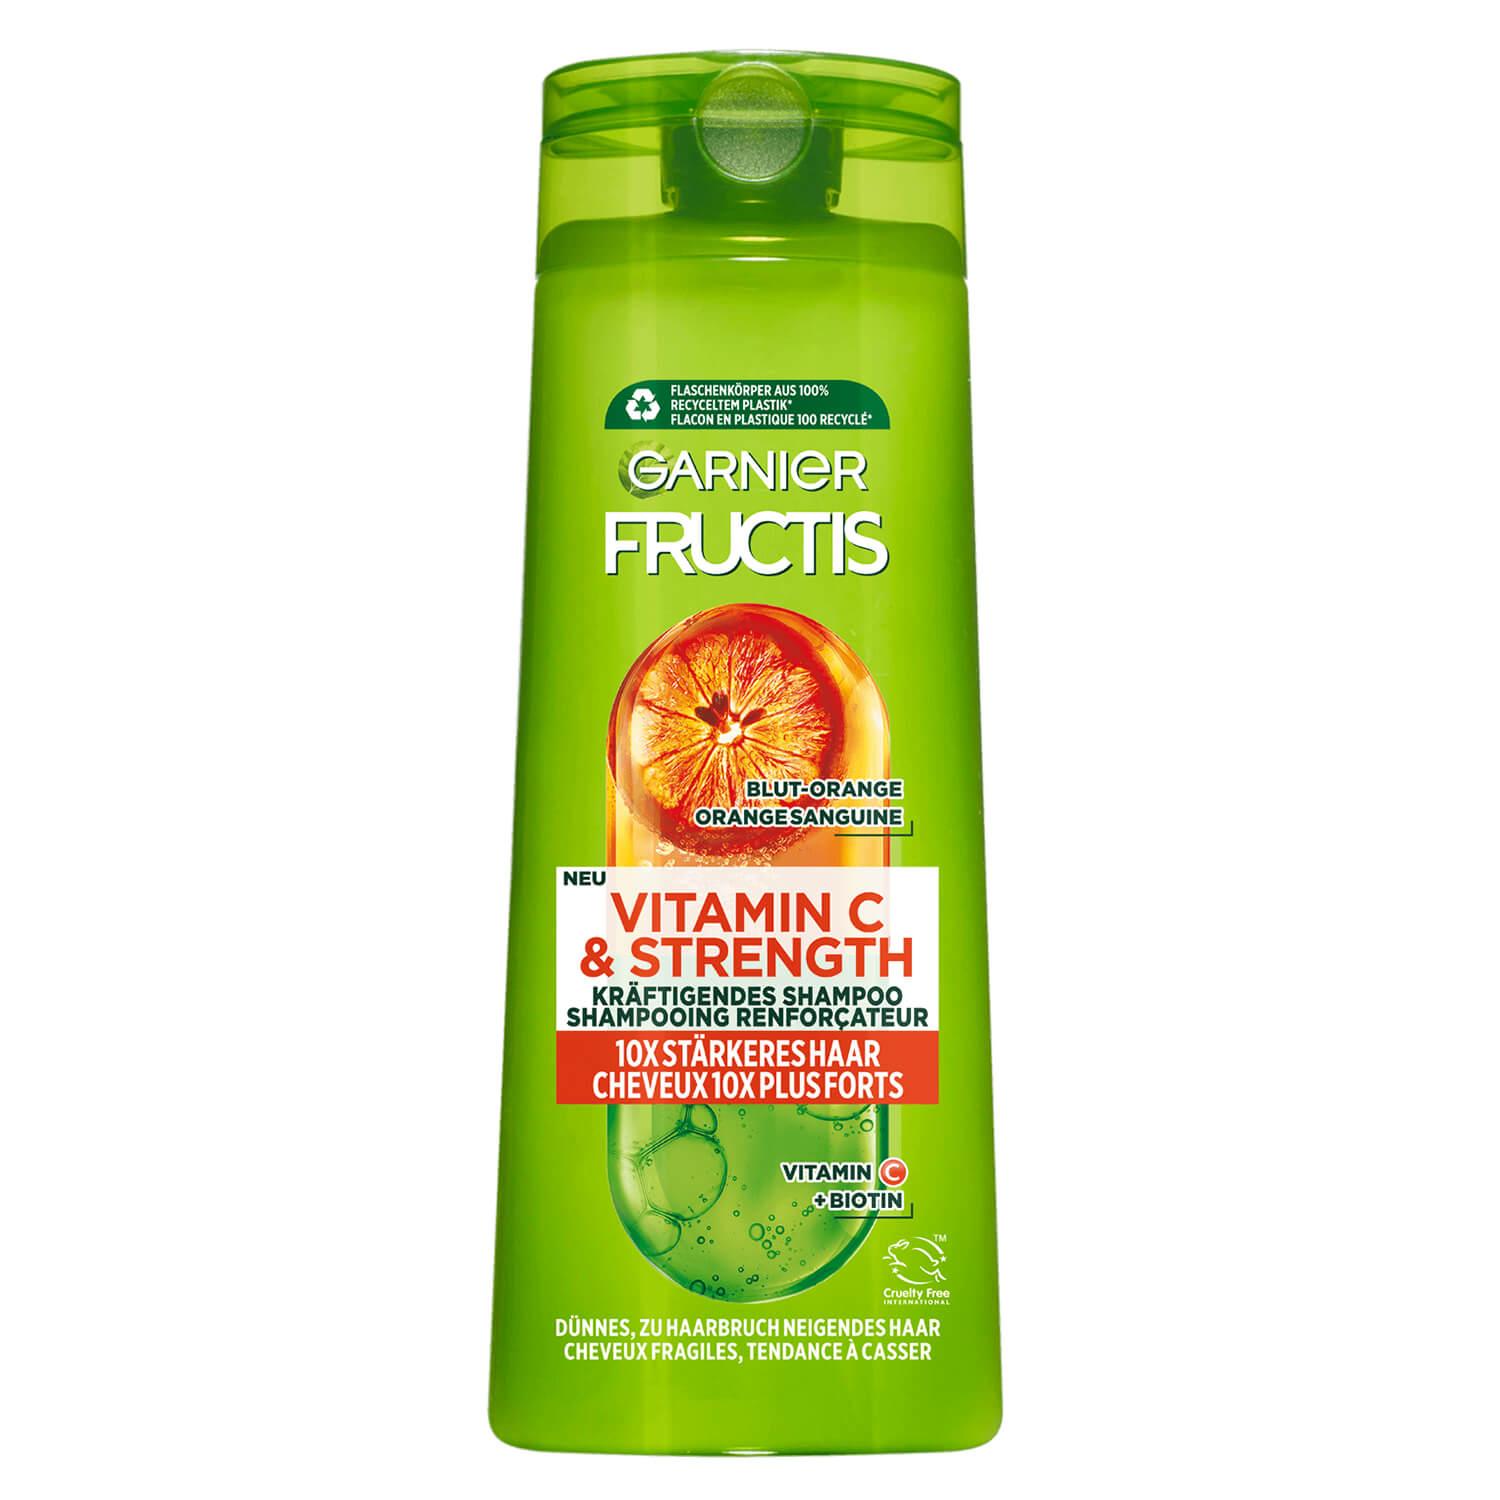 Fructis - Vitamin C & Strength Shampoo